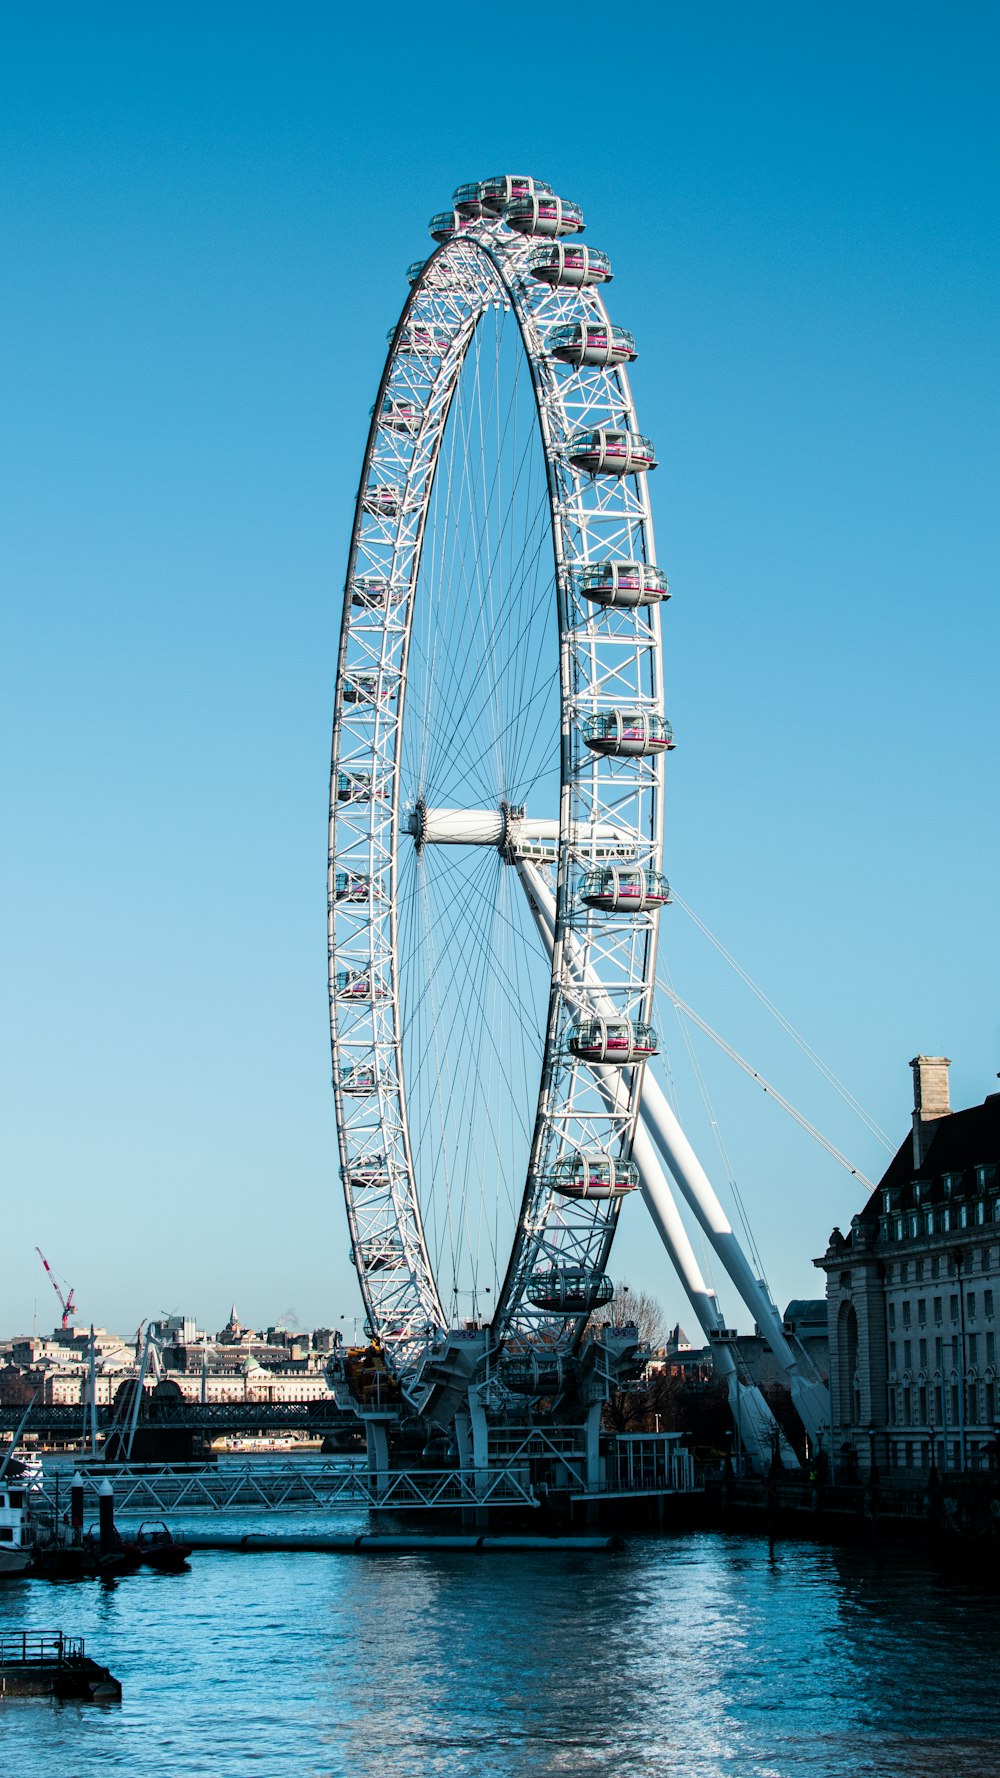 white ferris wheel under blue sky during daytime